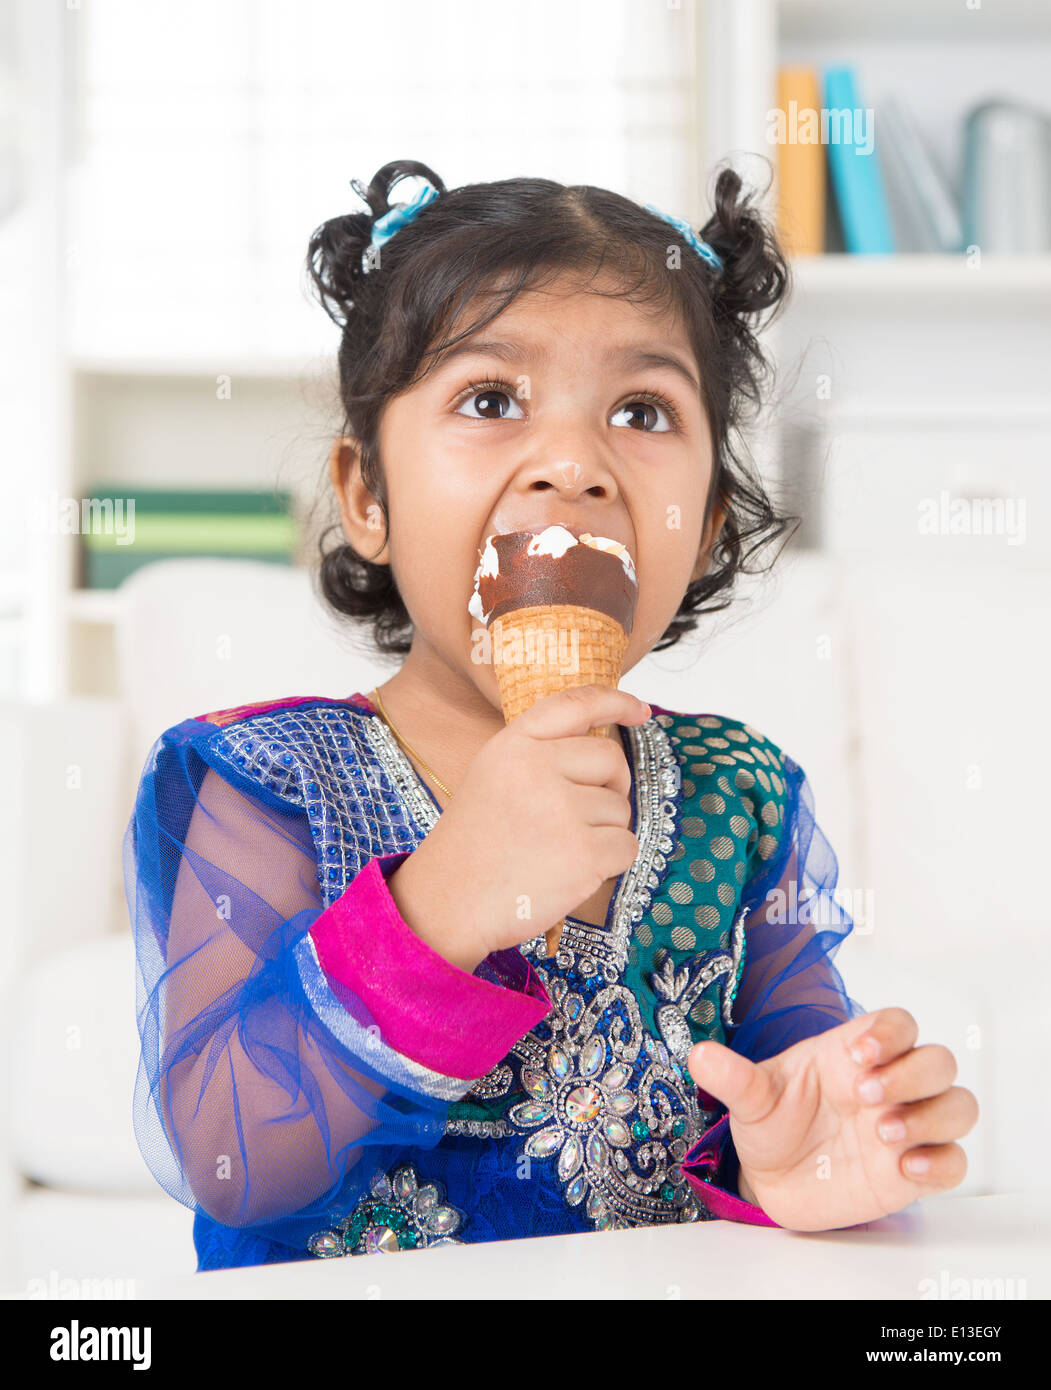 Eating ice cream. Cute Indian Asian girl enjoying an ice cream. Beautiful child model at home. Stock Photo